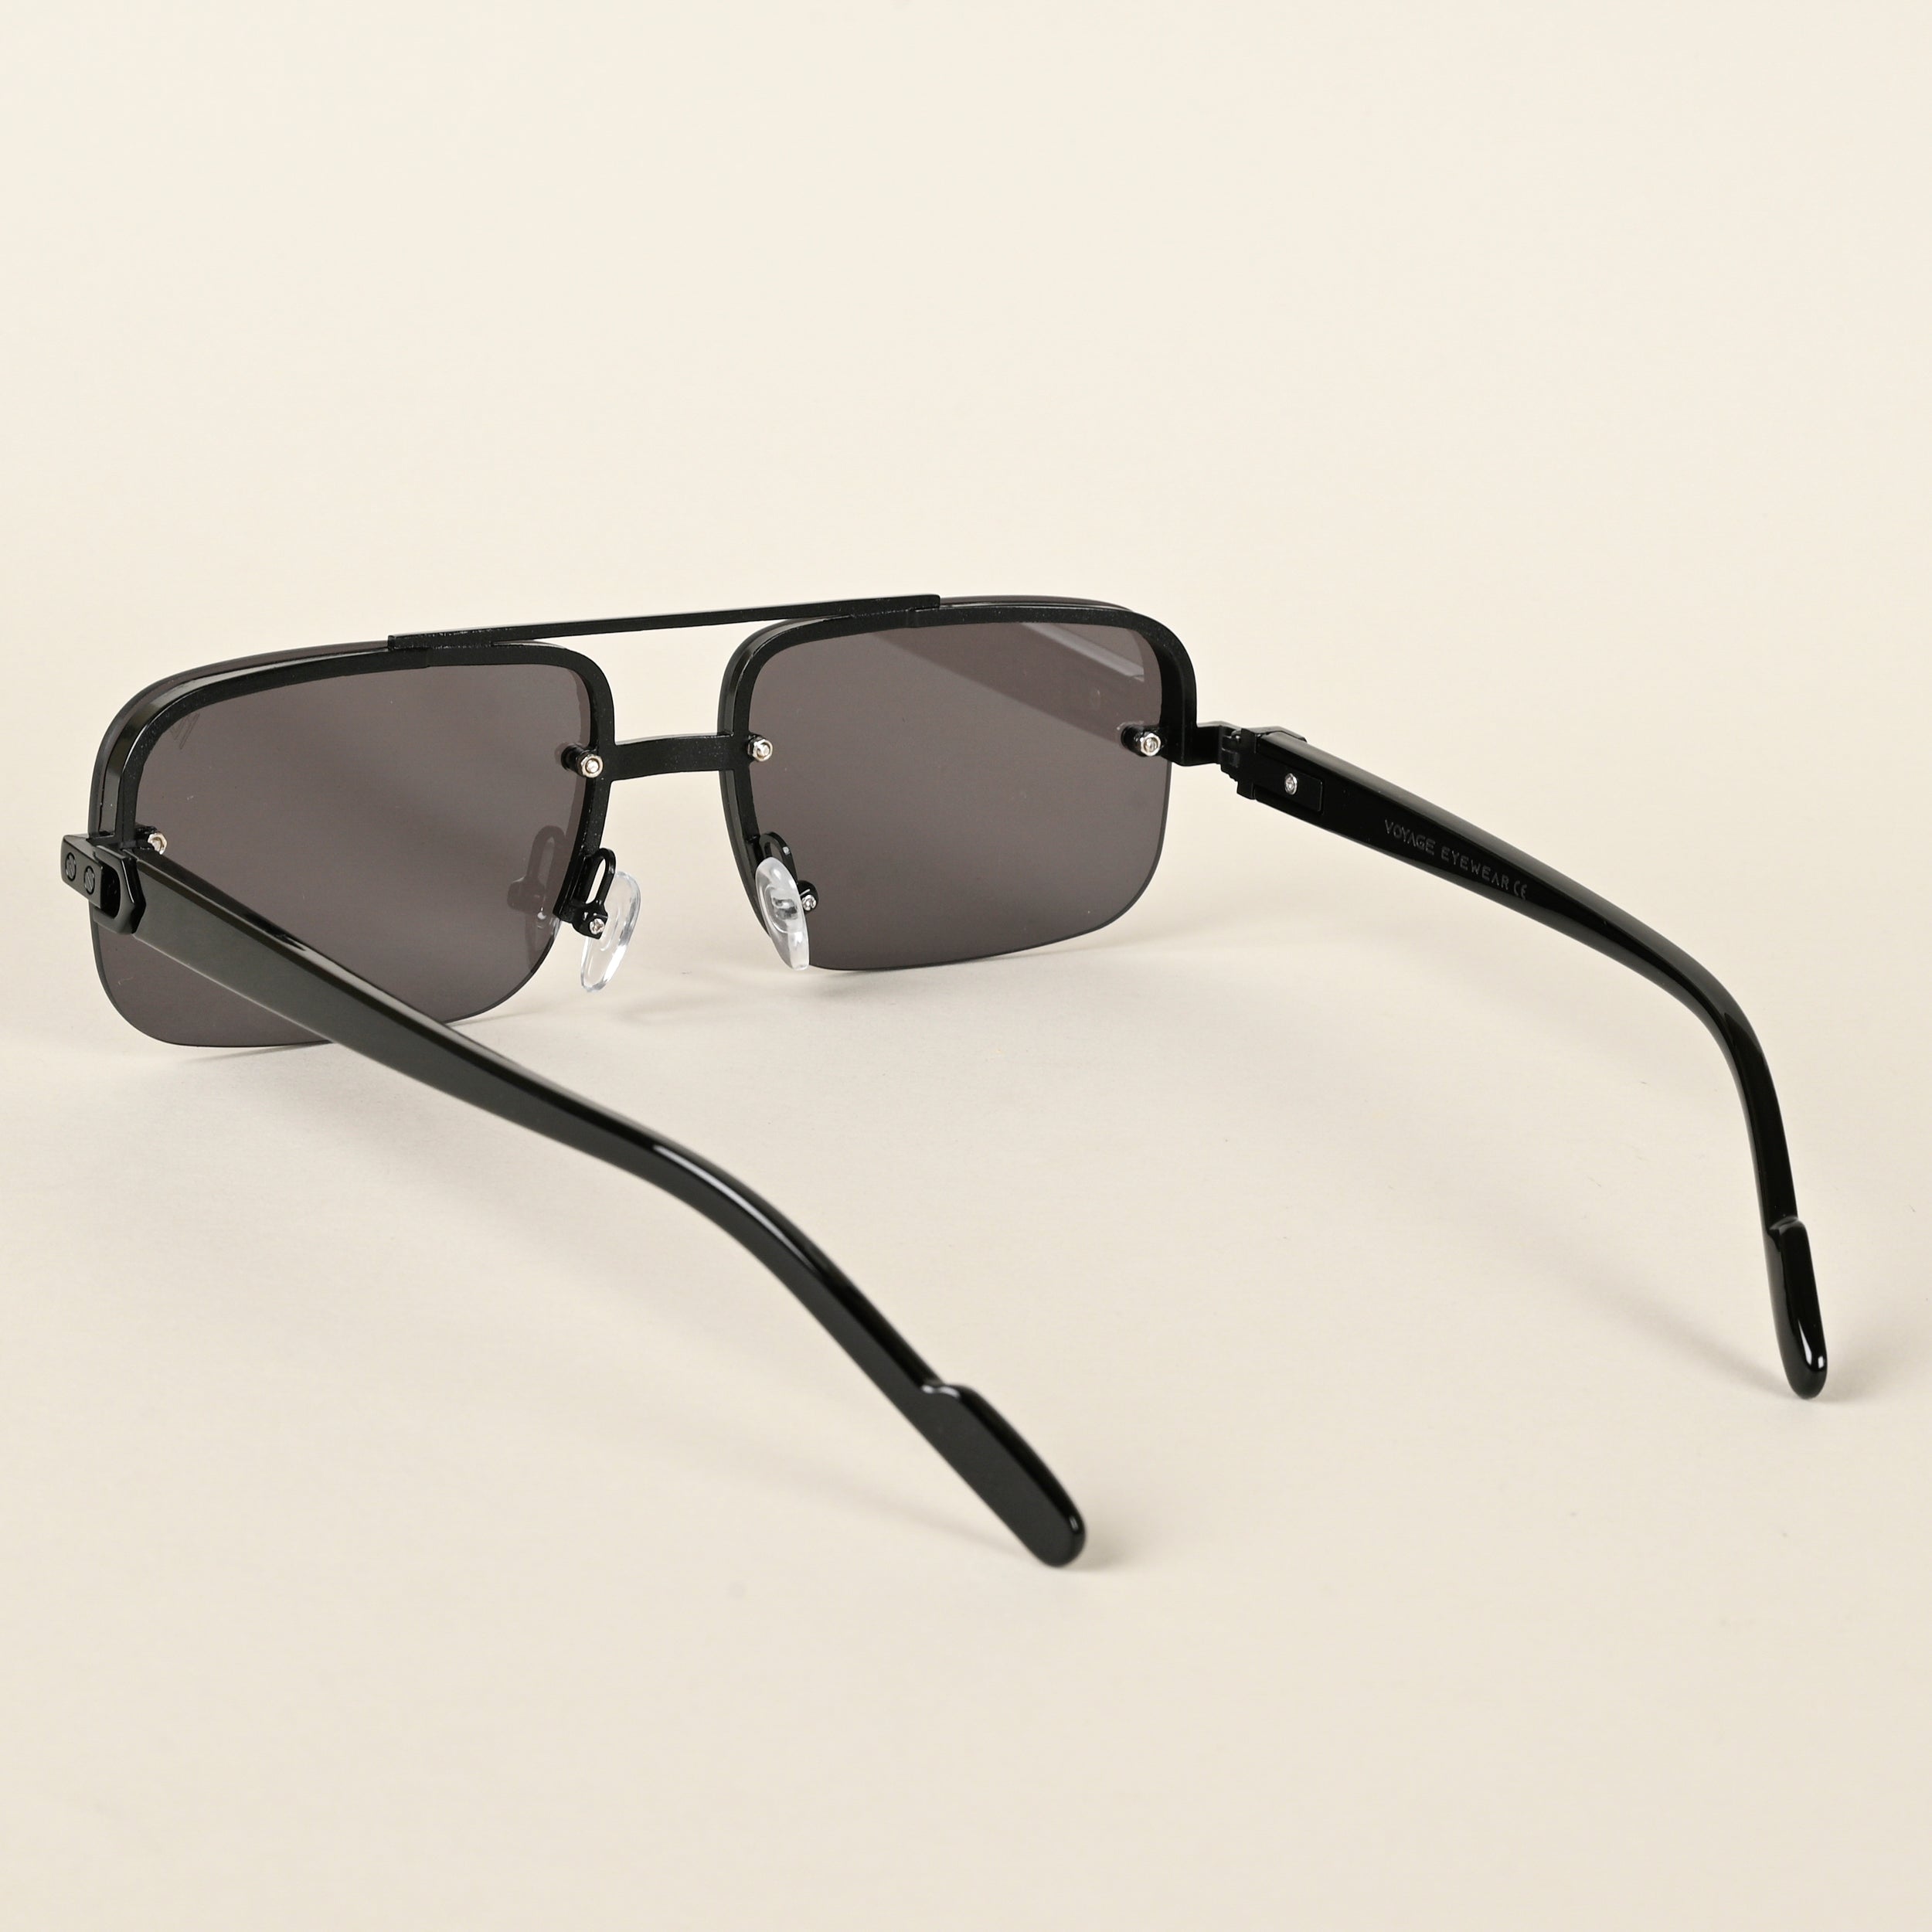 Voyage Black Rectangle Sunglasses for Men & Women (2317MG4503)